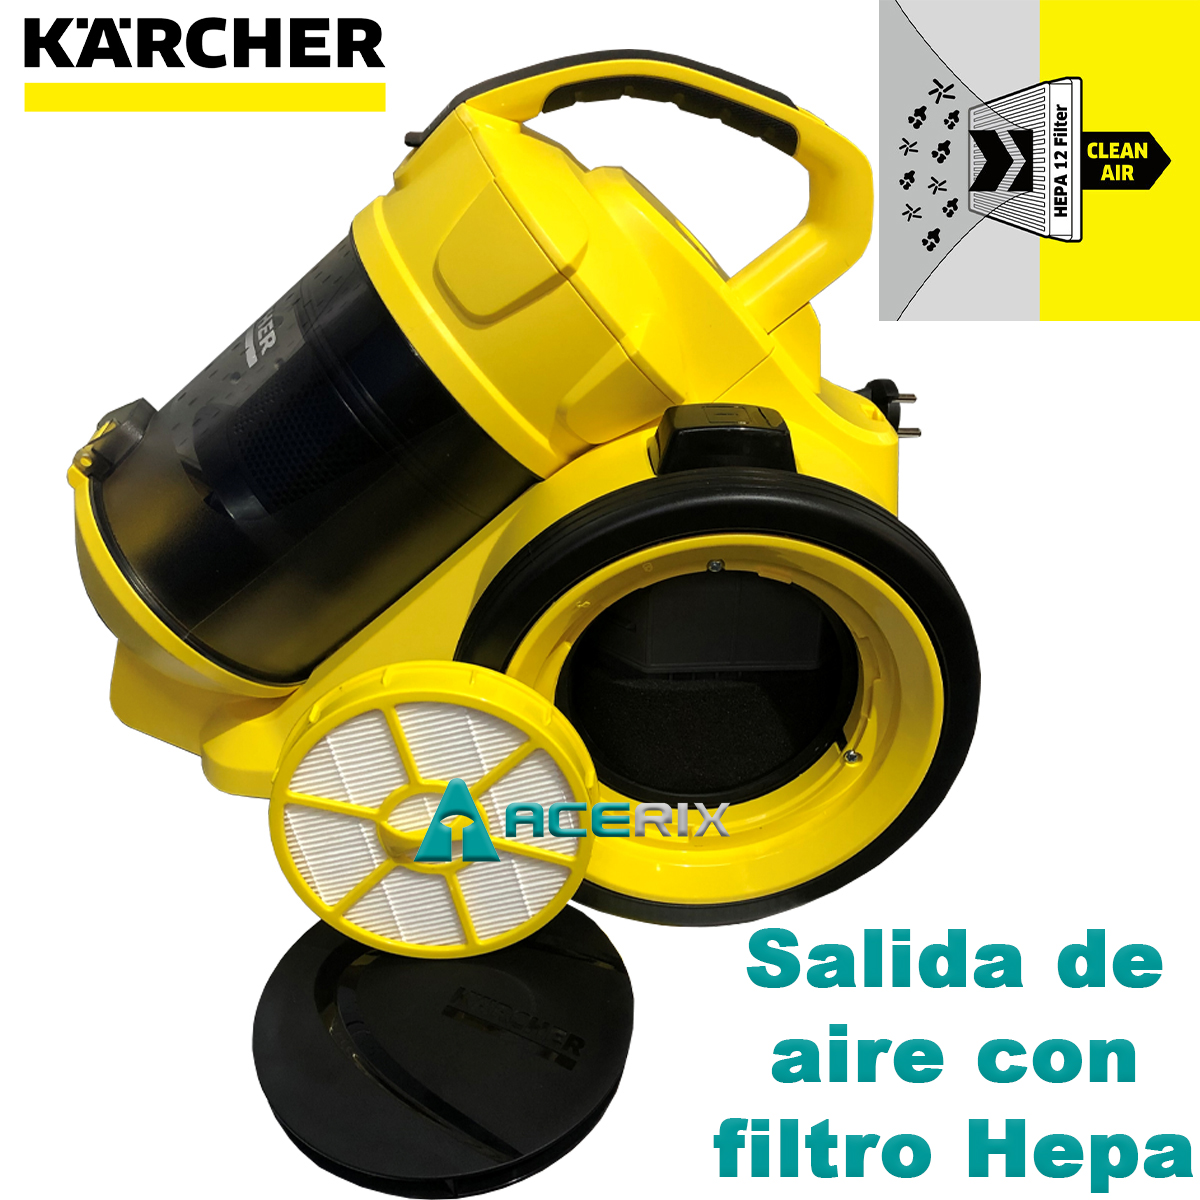 Filtro hepa para aspiradora vc3 Karcher - Tienda Karcher-Aspiradora